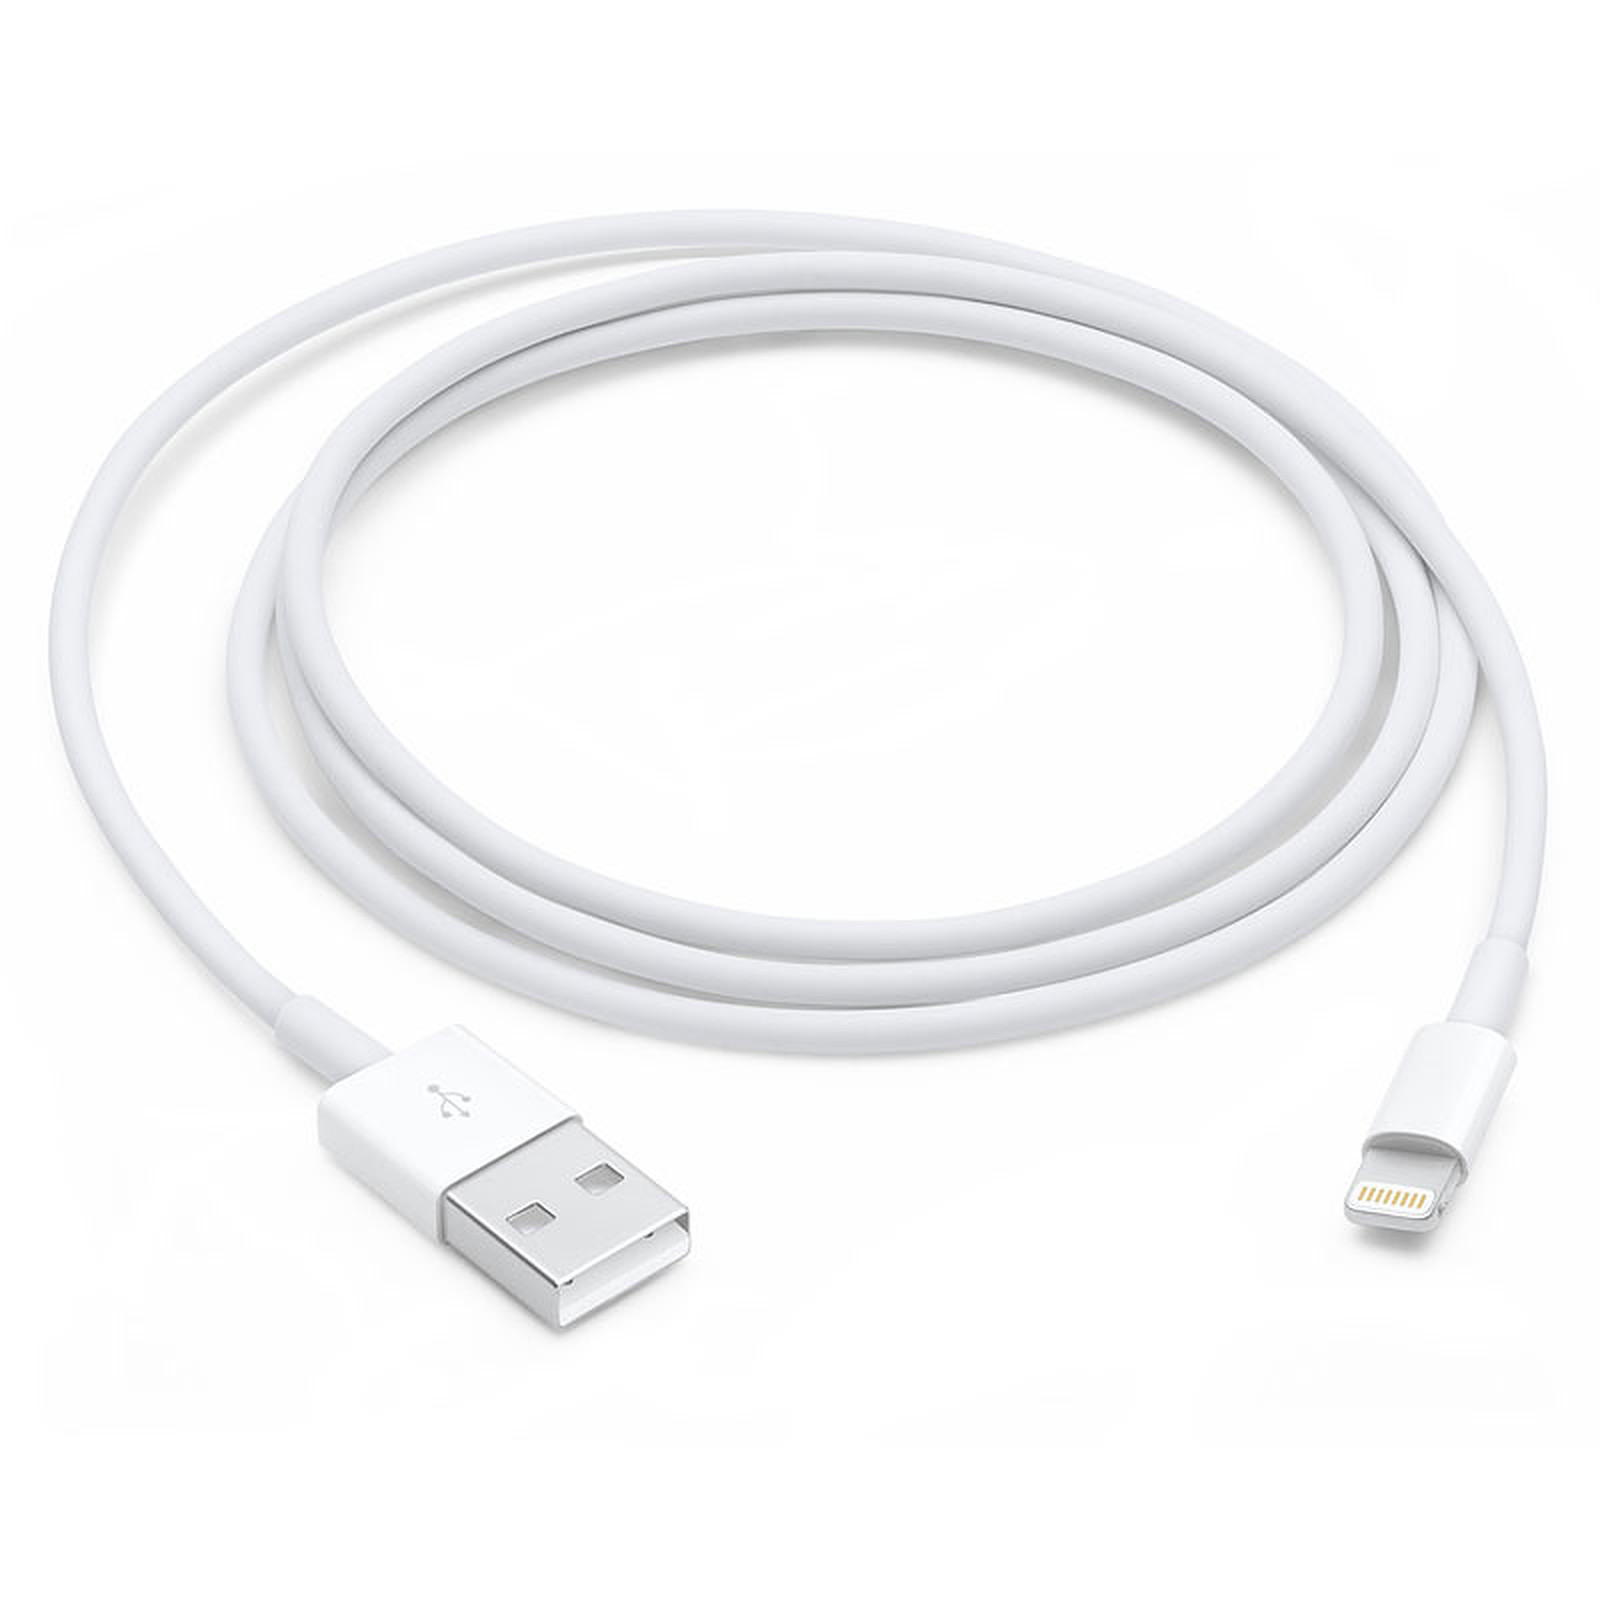 Apple Cable Lightning vers USB - 1 m - Accessoires Apple Apple